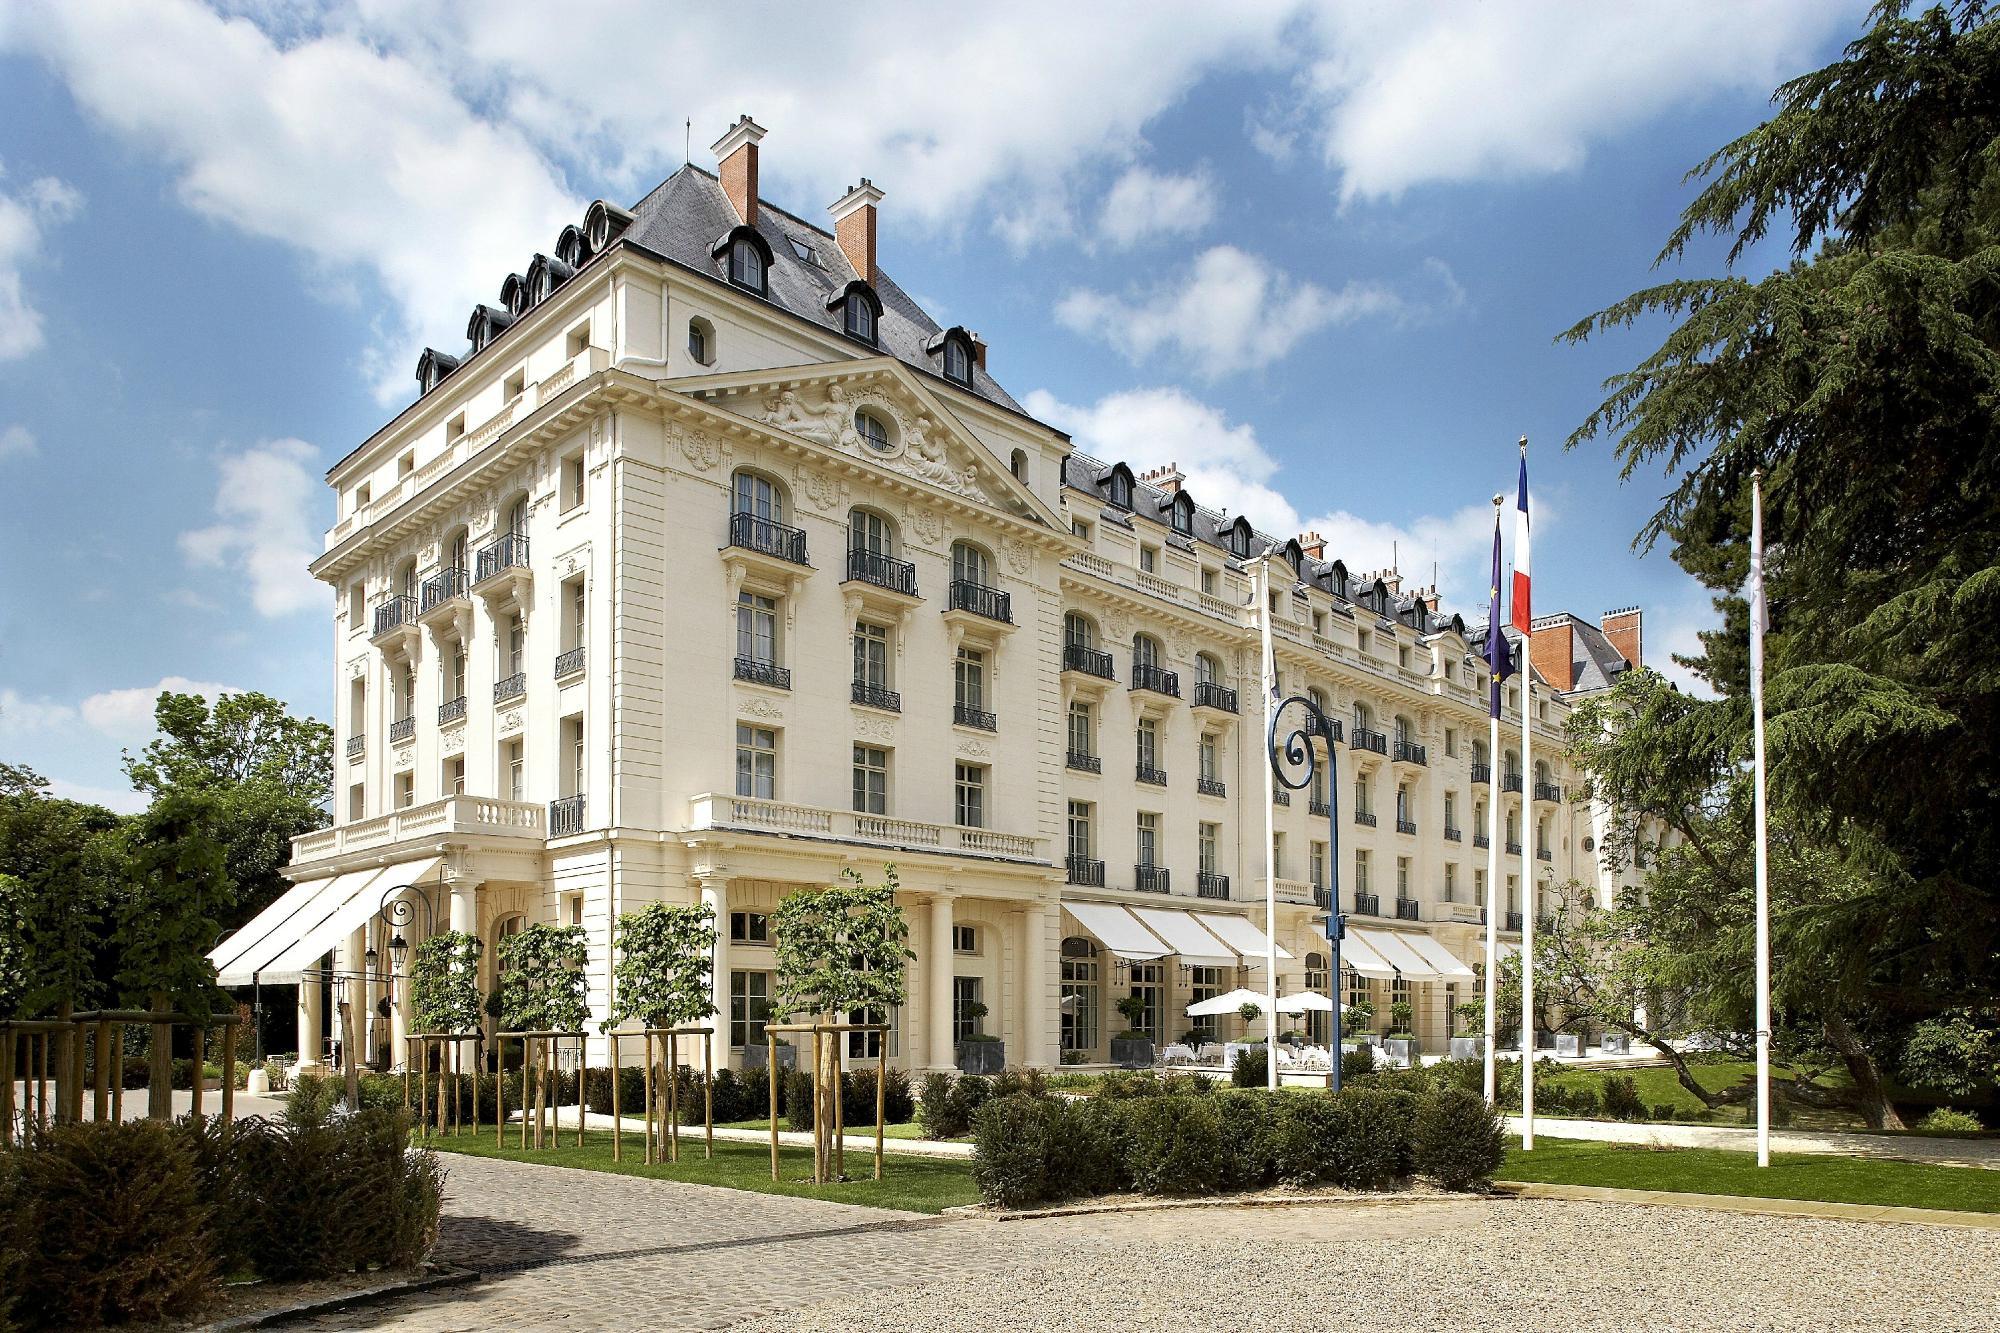 Photo of Waldorf Astoria Trianon Palace Versailles, Paris, France